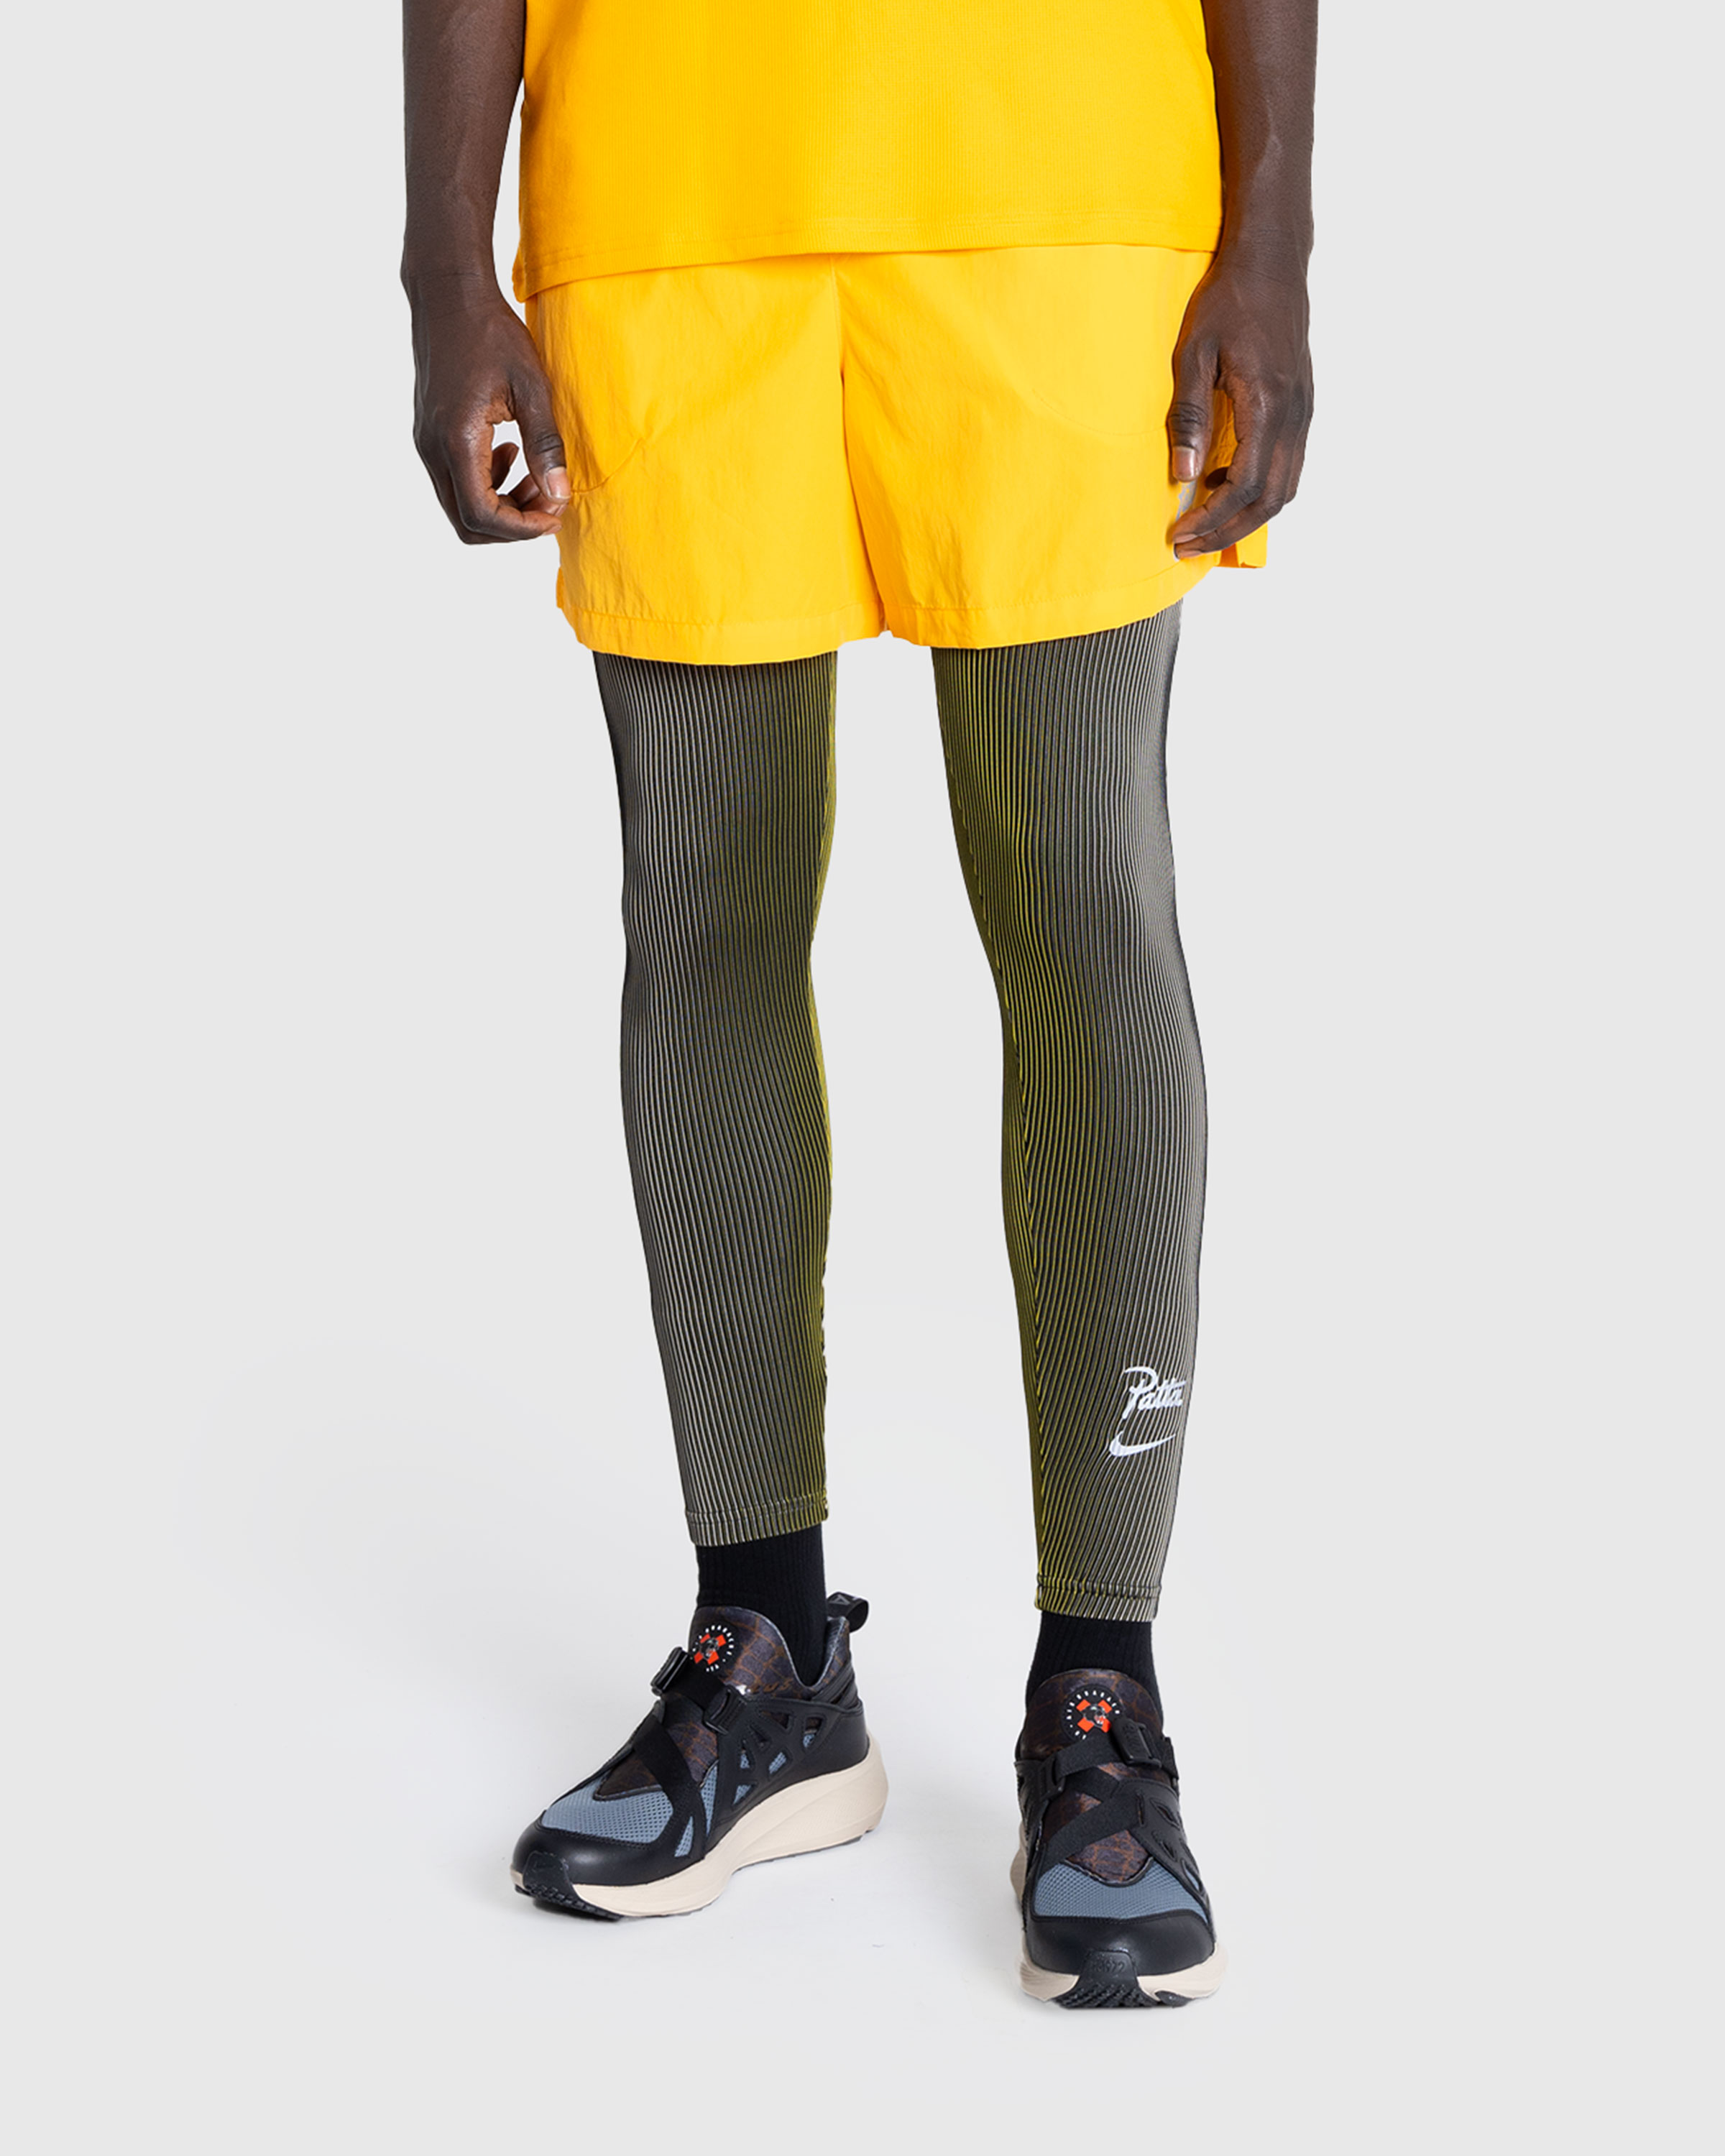 Nike x Patta – Men's Shorts Sundial - Active Shorts - Yellow - Image 2